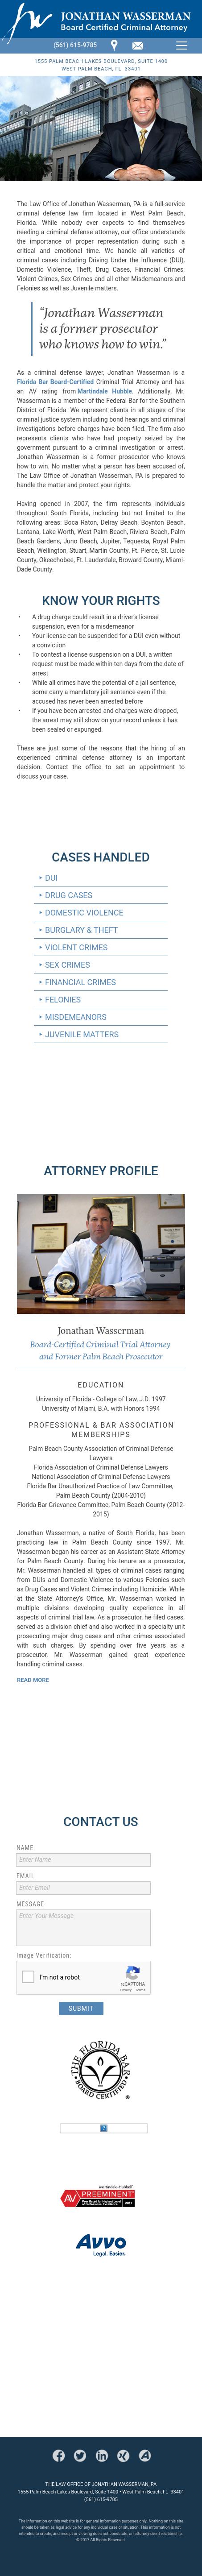 Wasserman, Jonathan - West Palm Beach FL Lawyers